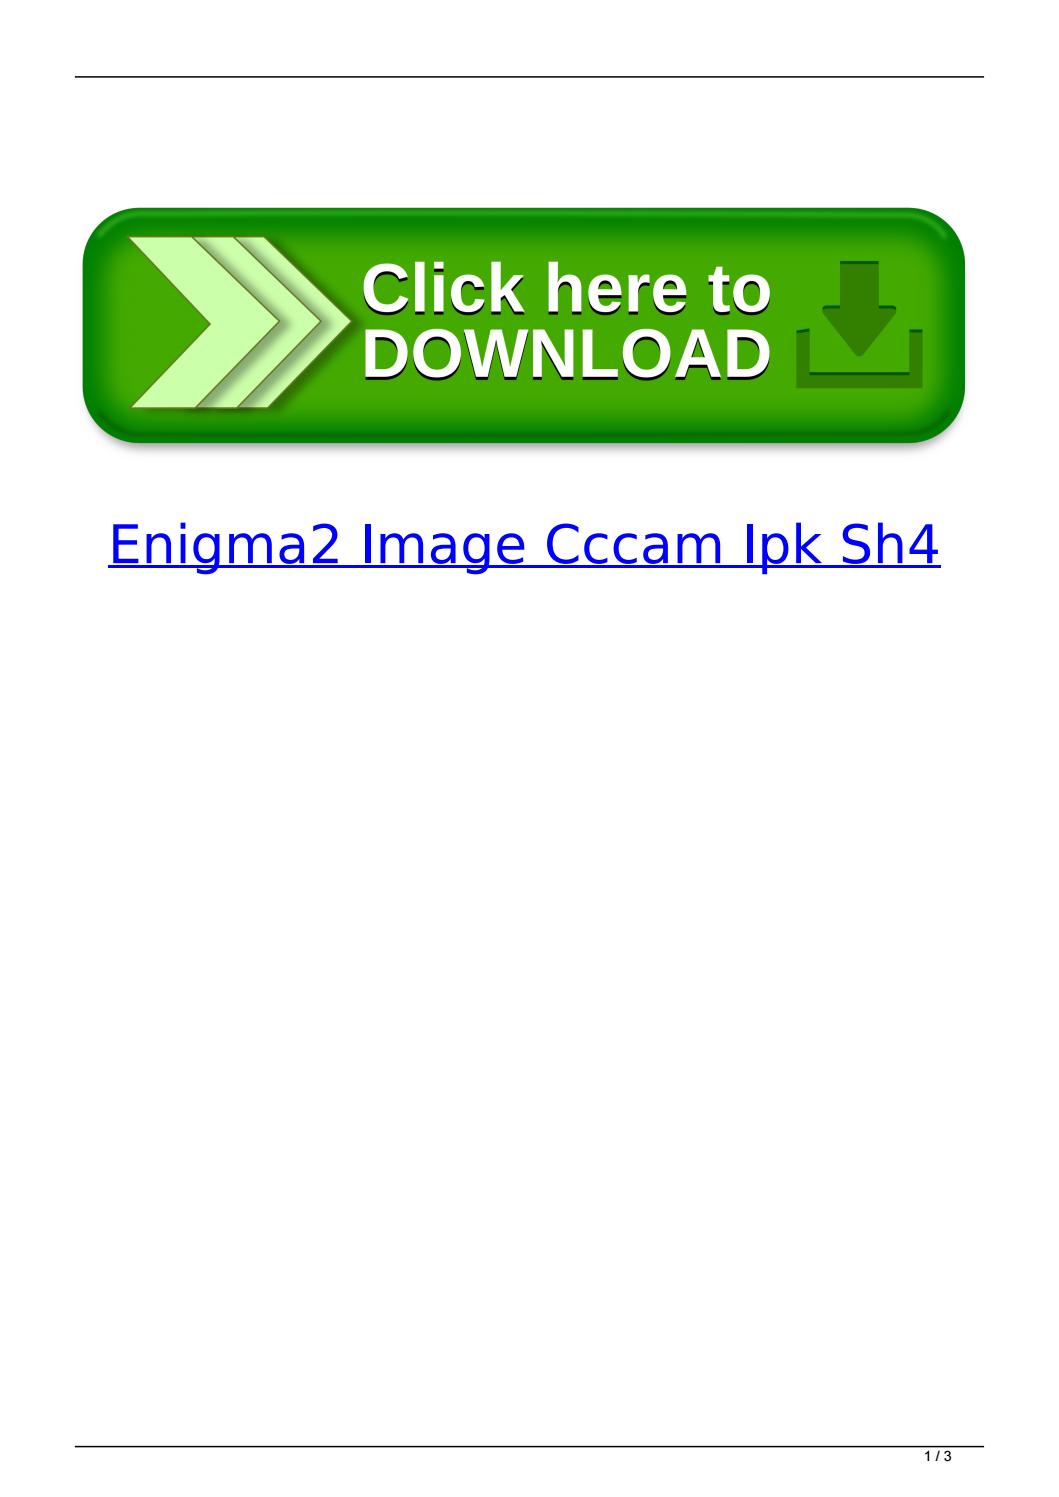 cccam sh4 ipk download